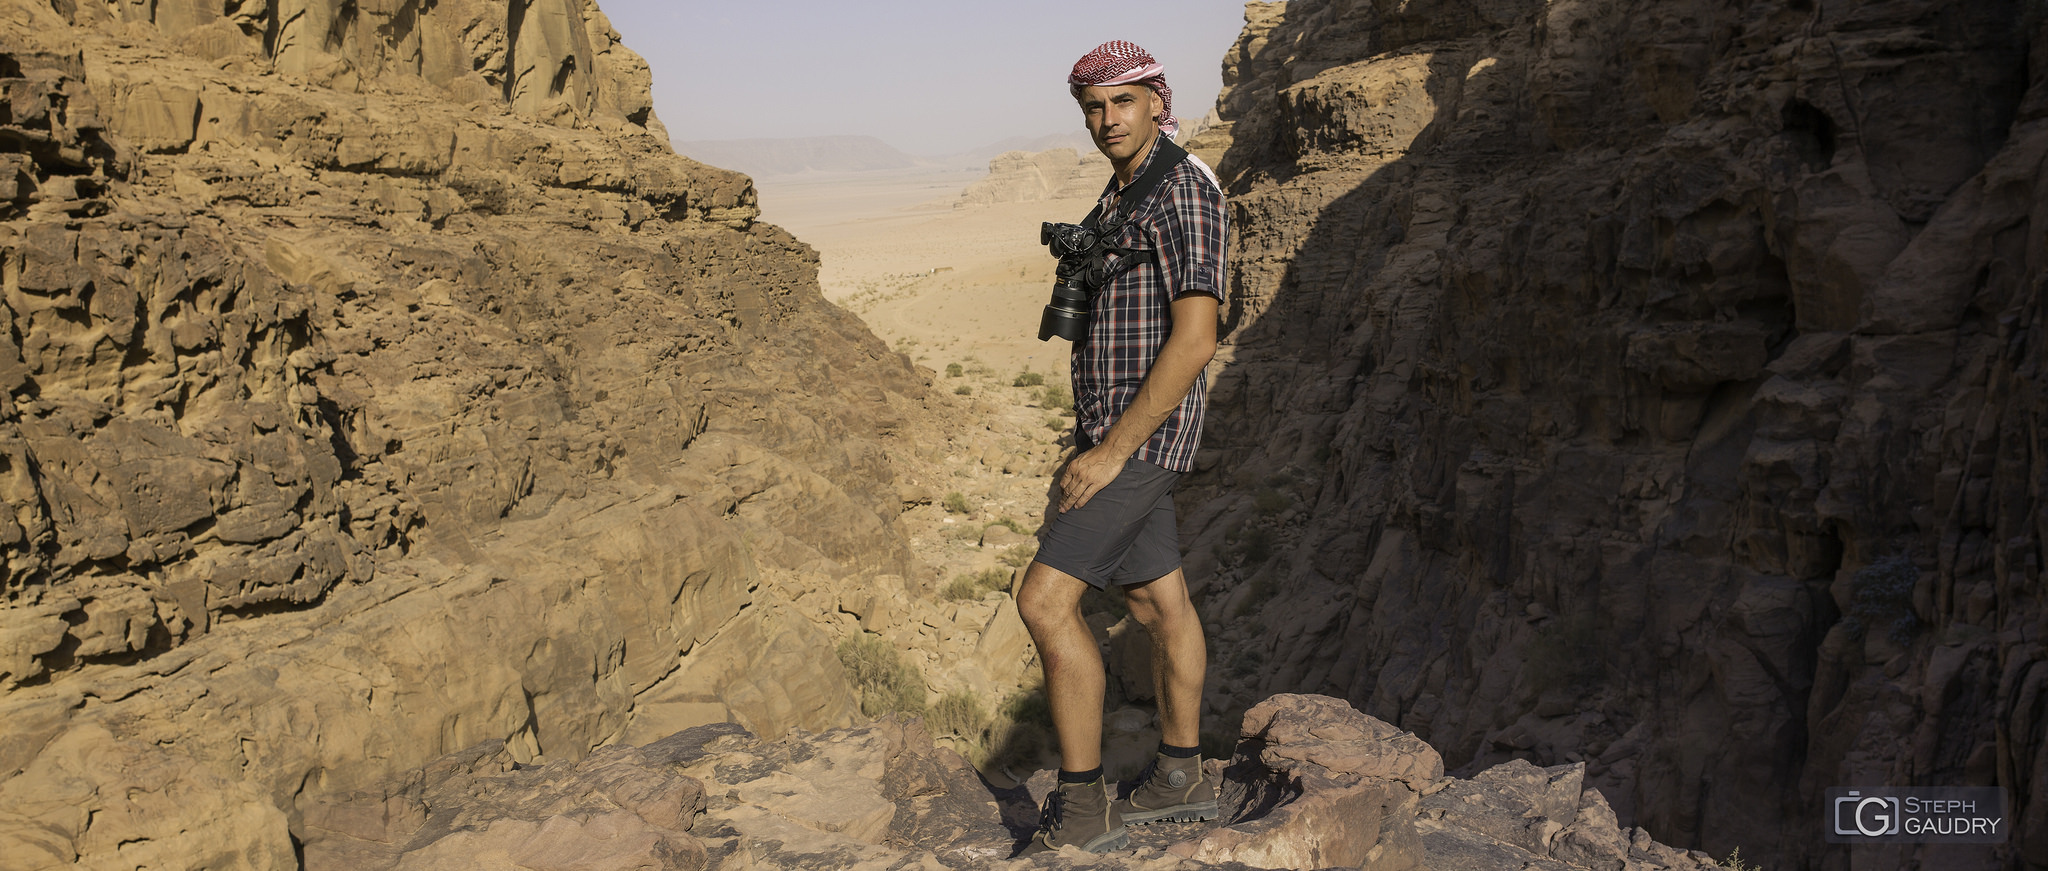 Rando dans les montagnes du Wadi-Rum